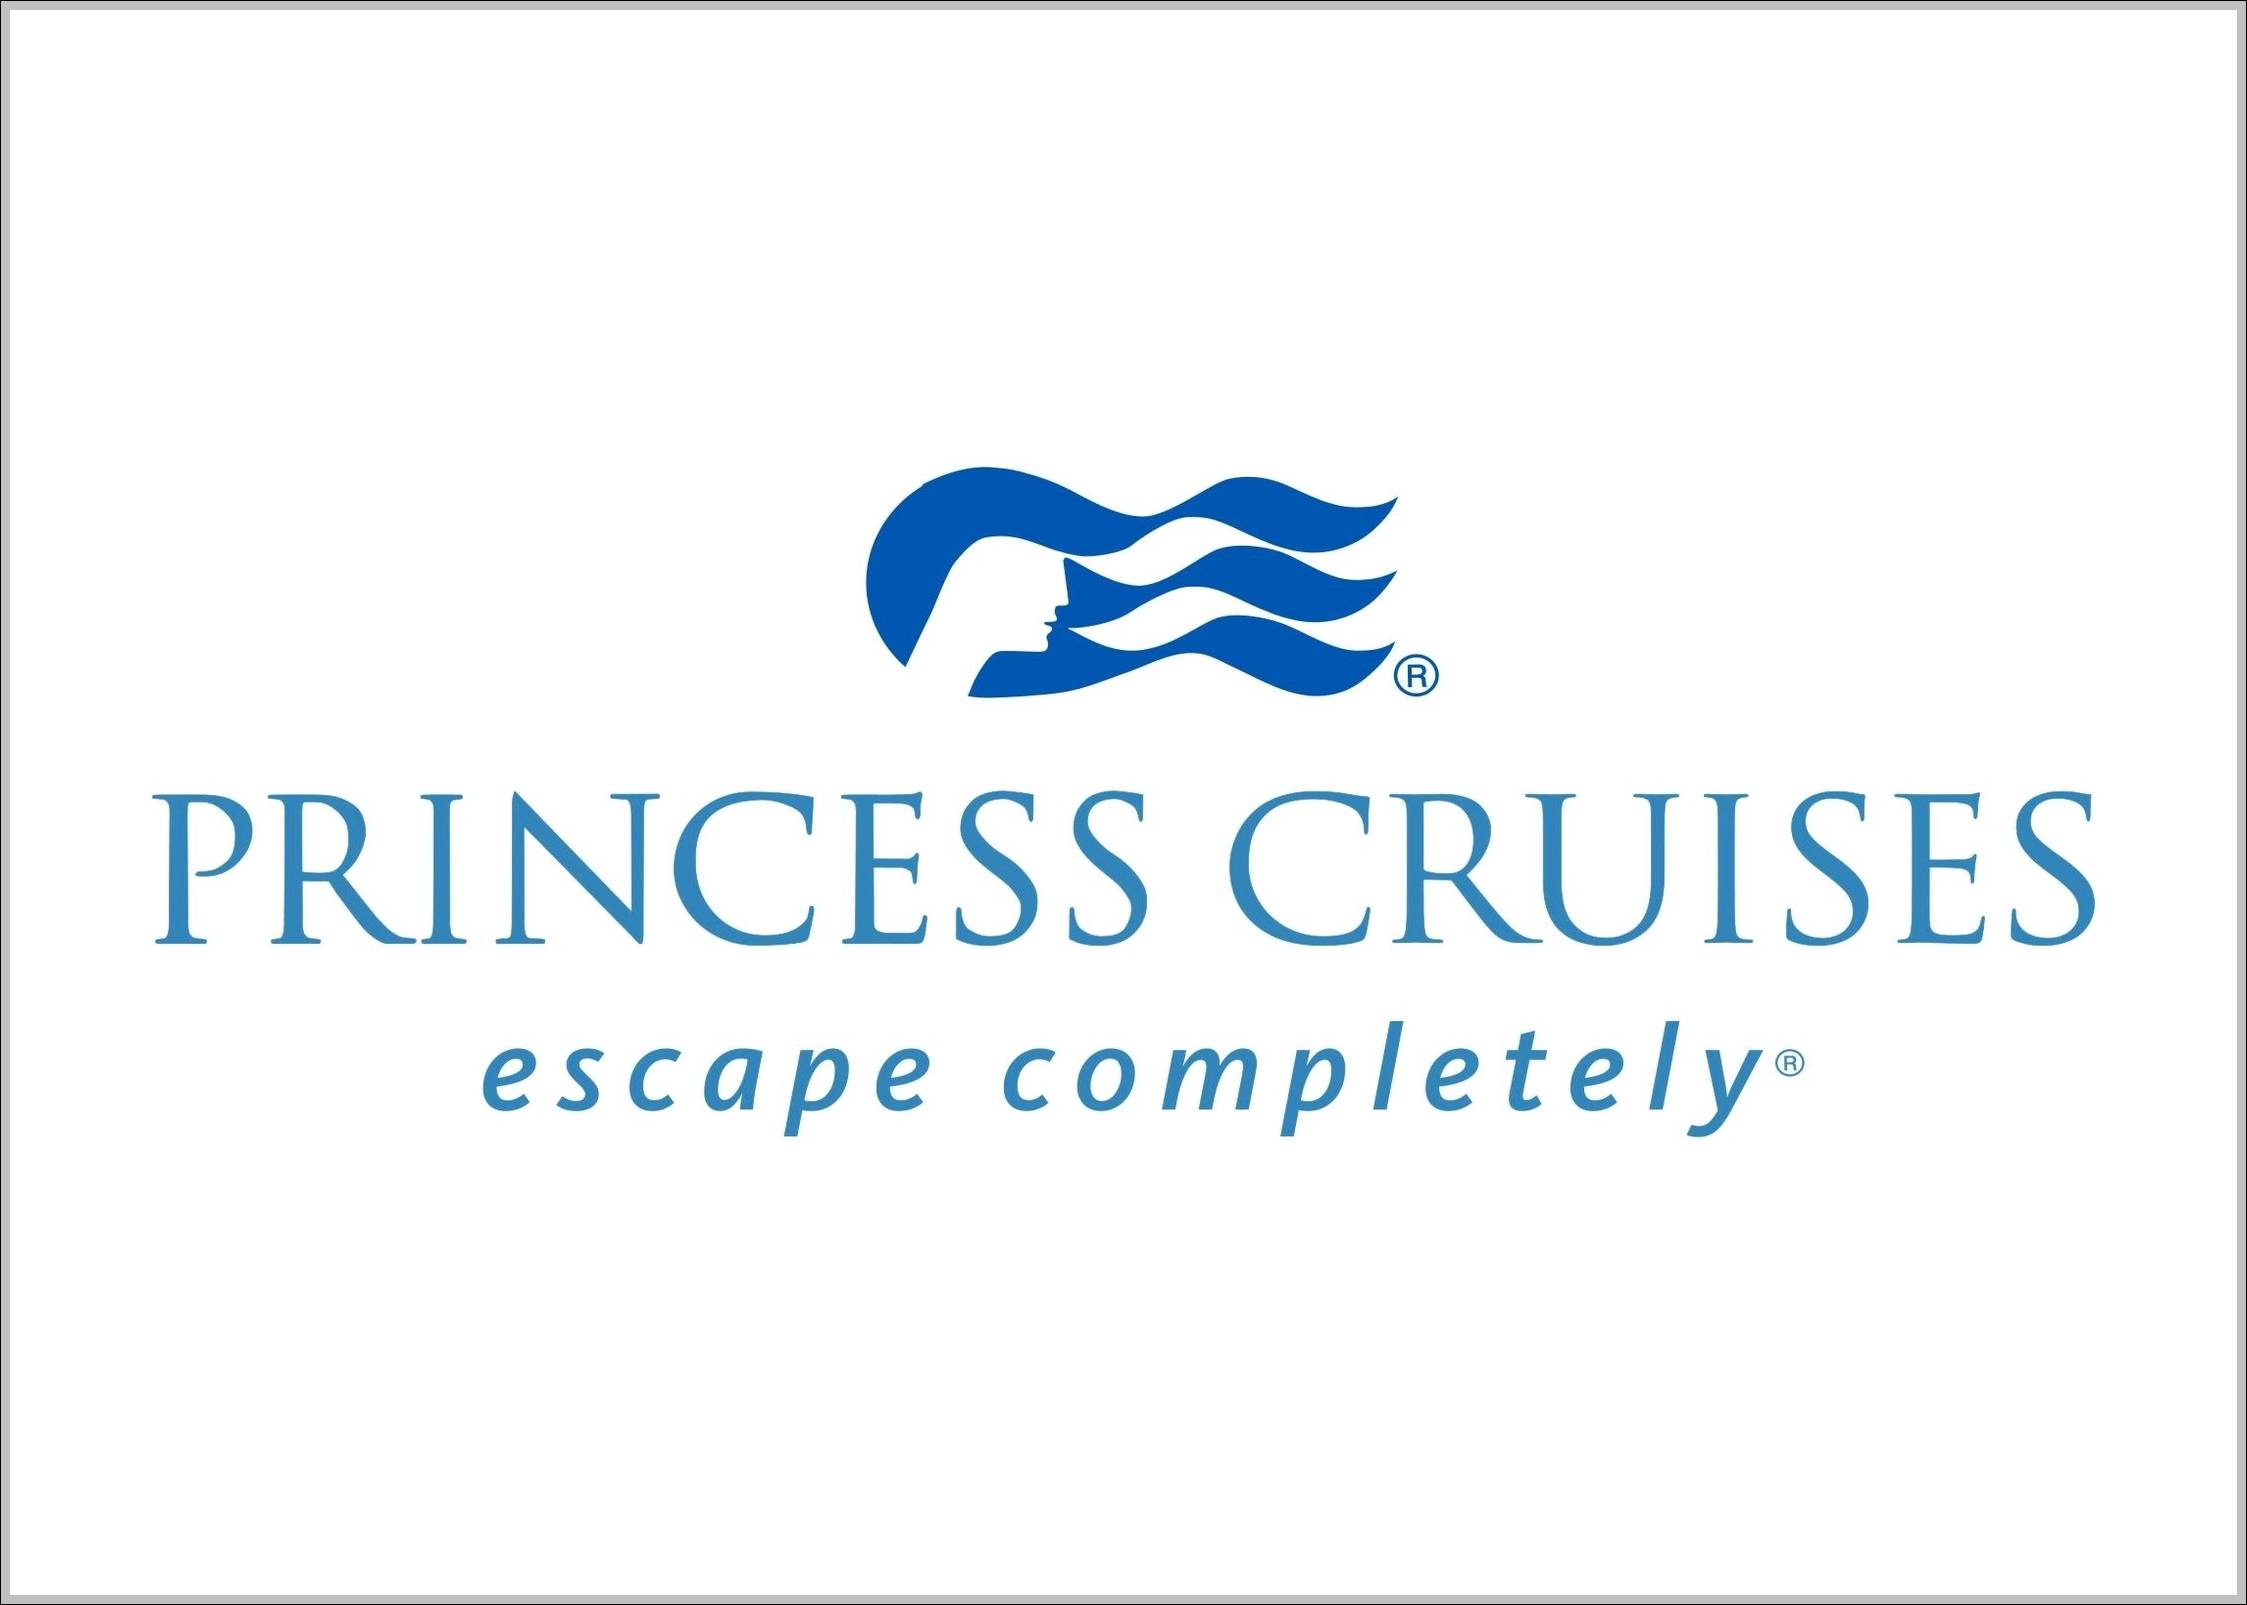 Princess Cruises logo slogan